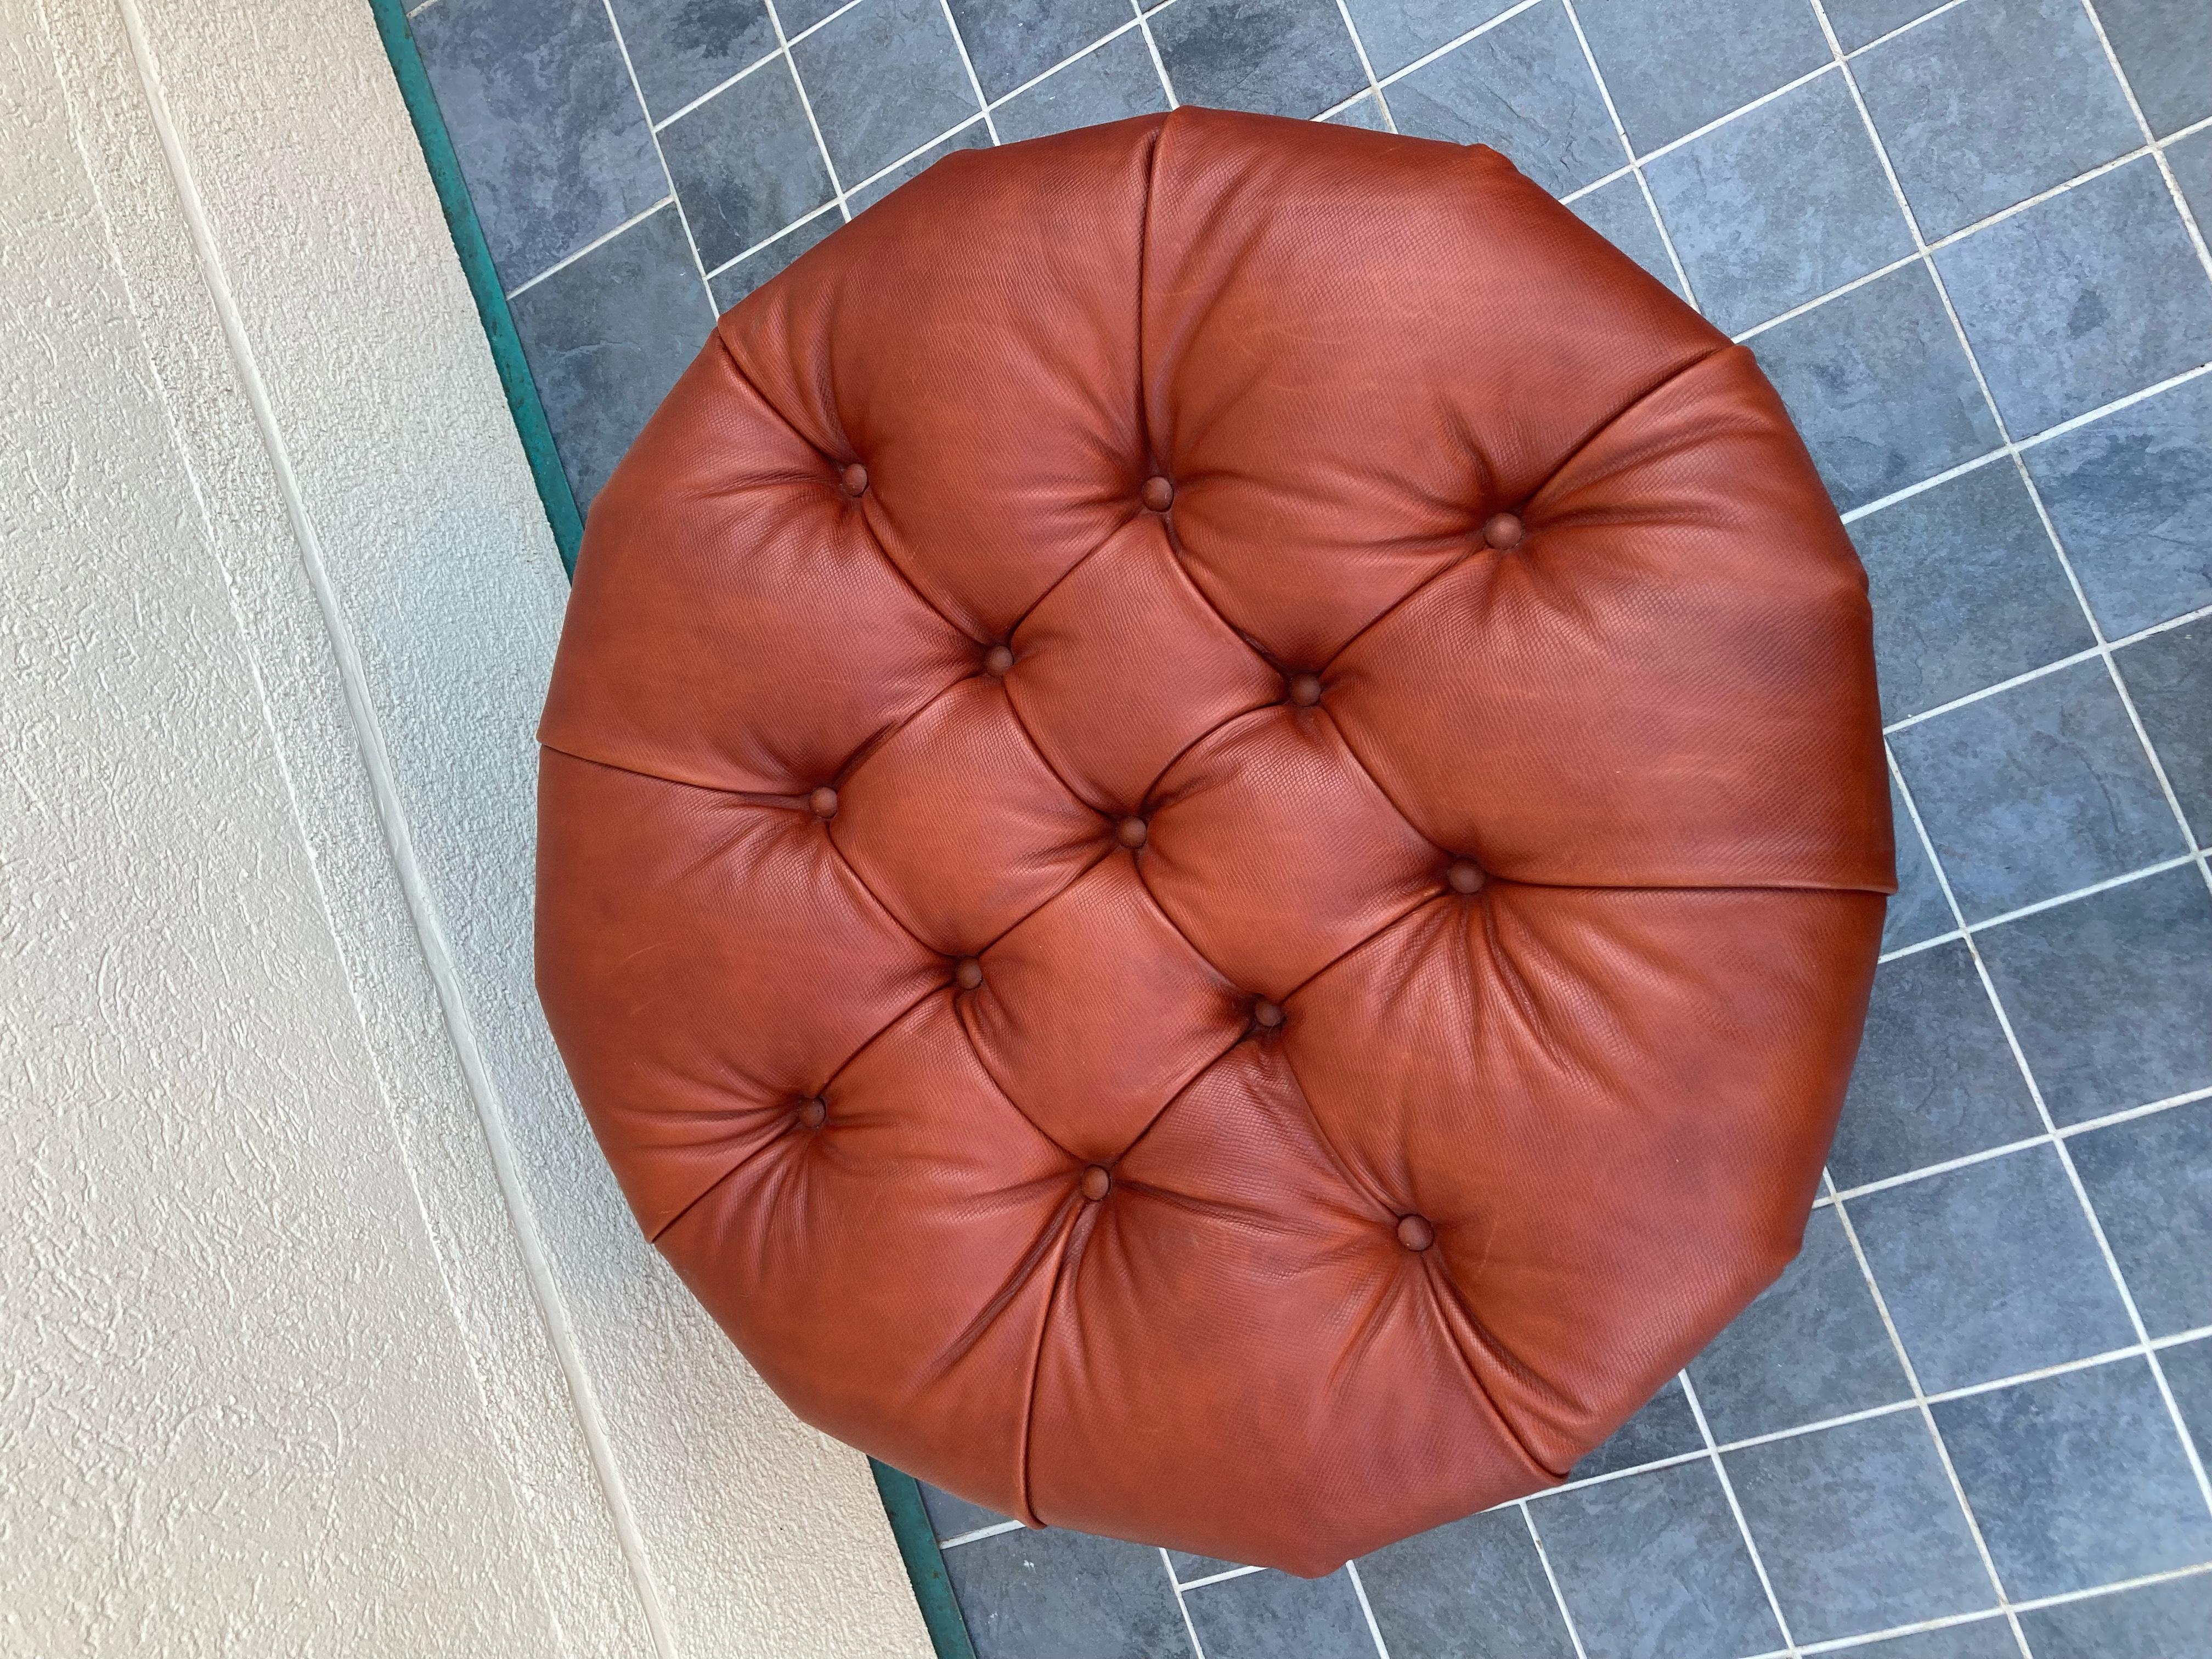 Cuir Table basse ottomane ronde en cuir touffeté rouge « Pumpkin » Ferrell Mittman en vente